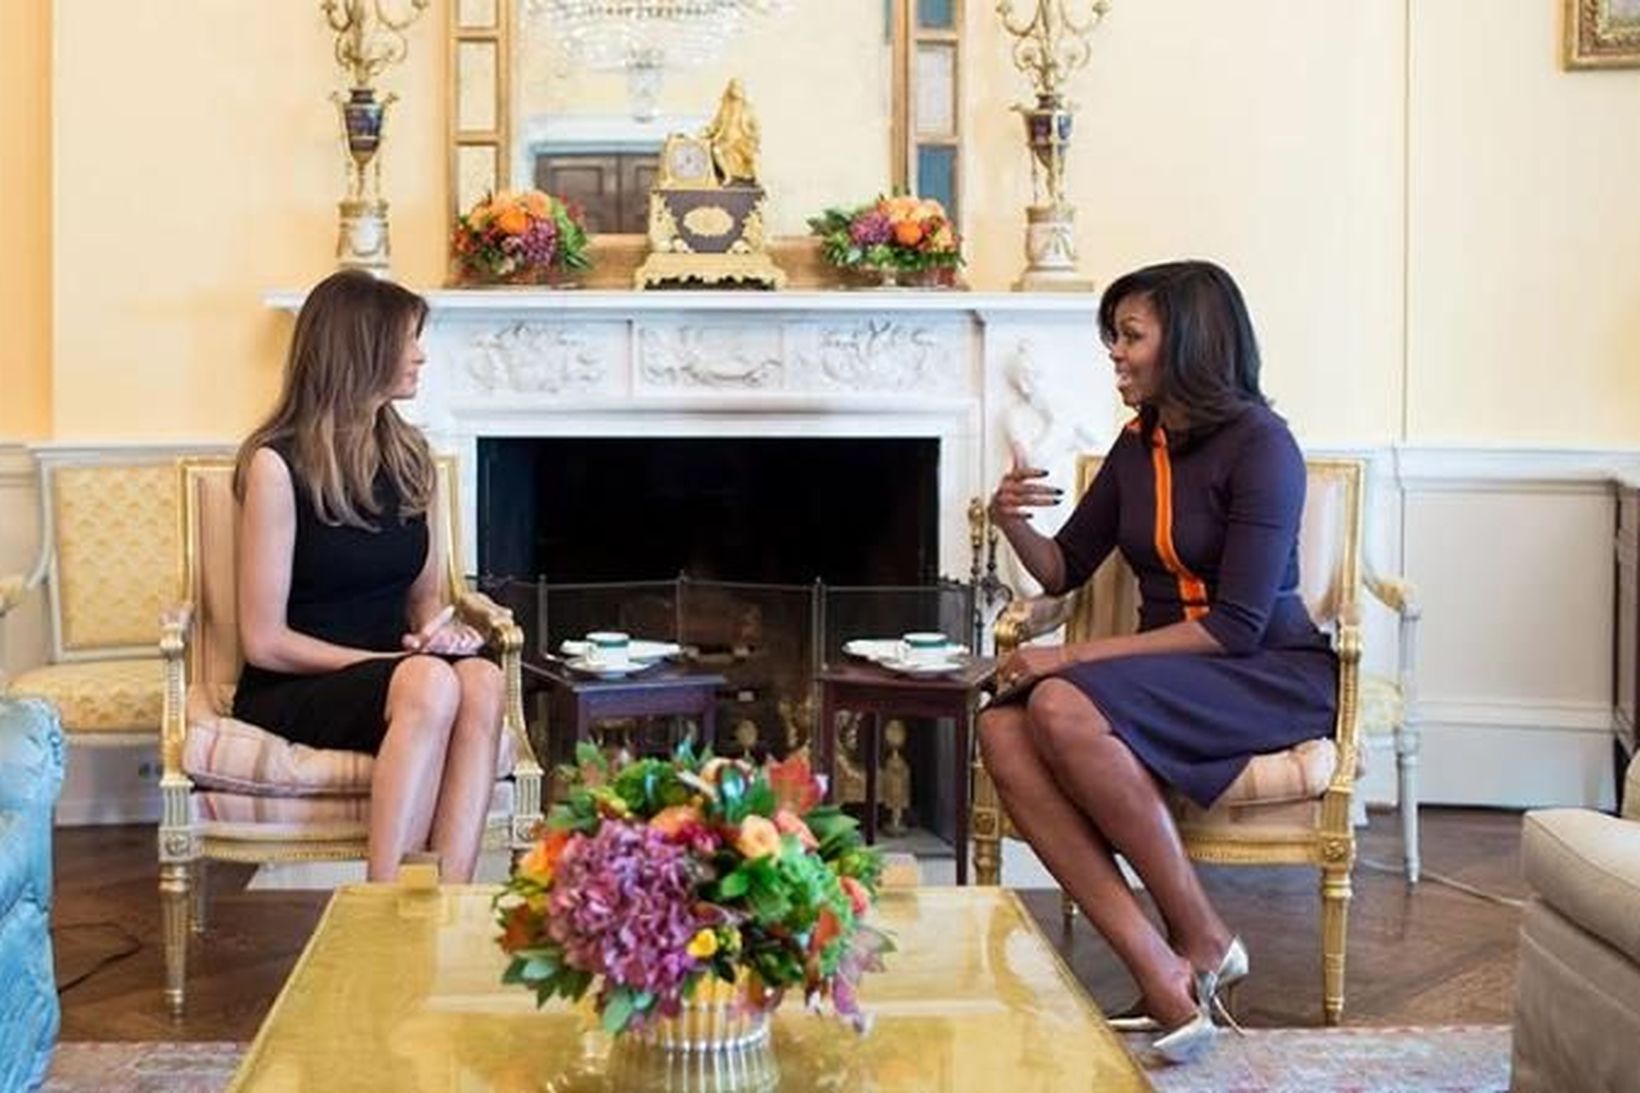 Tilvonandi forsetafrú Bandaríkjanna, Melania Trump, hitti fráfarandi forsetafrúna, Michelle Obama.